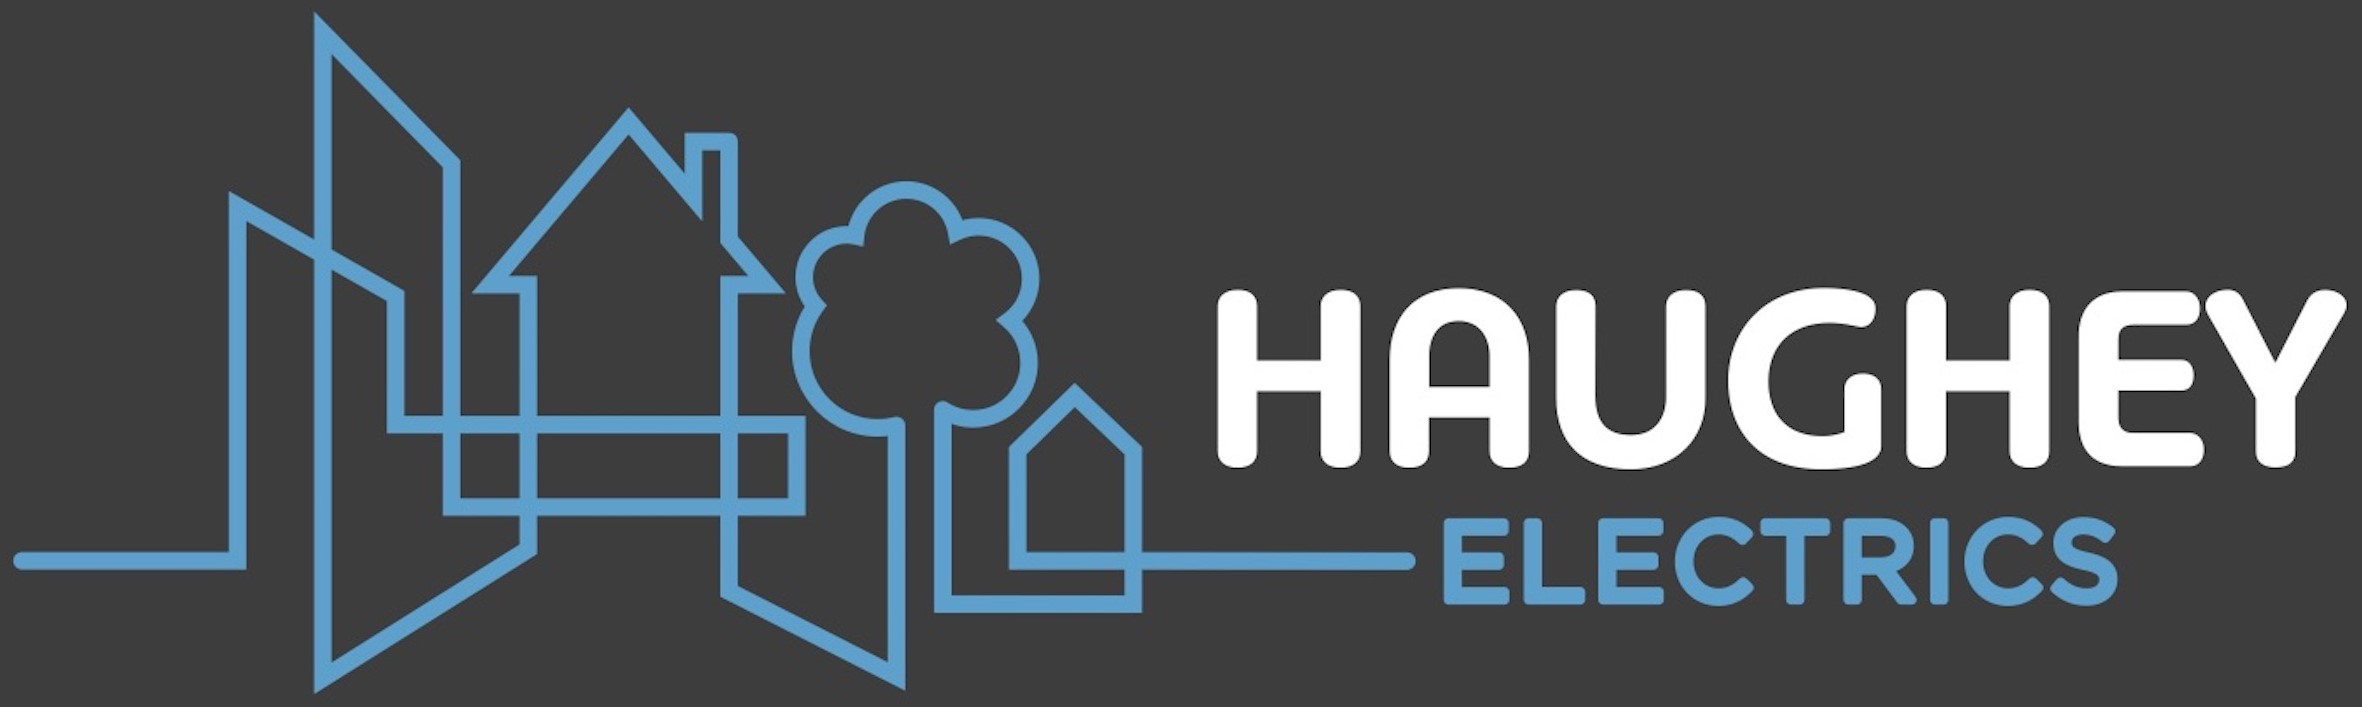 Martin Haughey Electrics